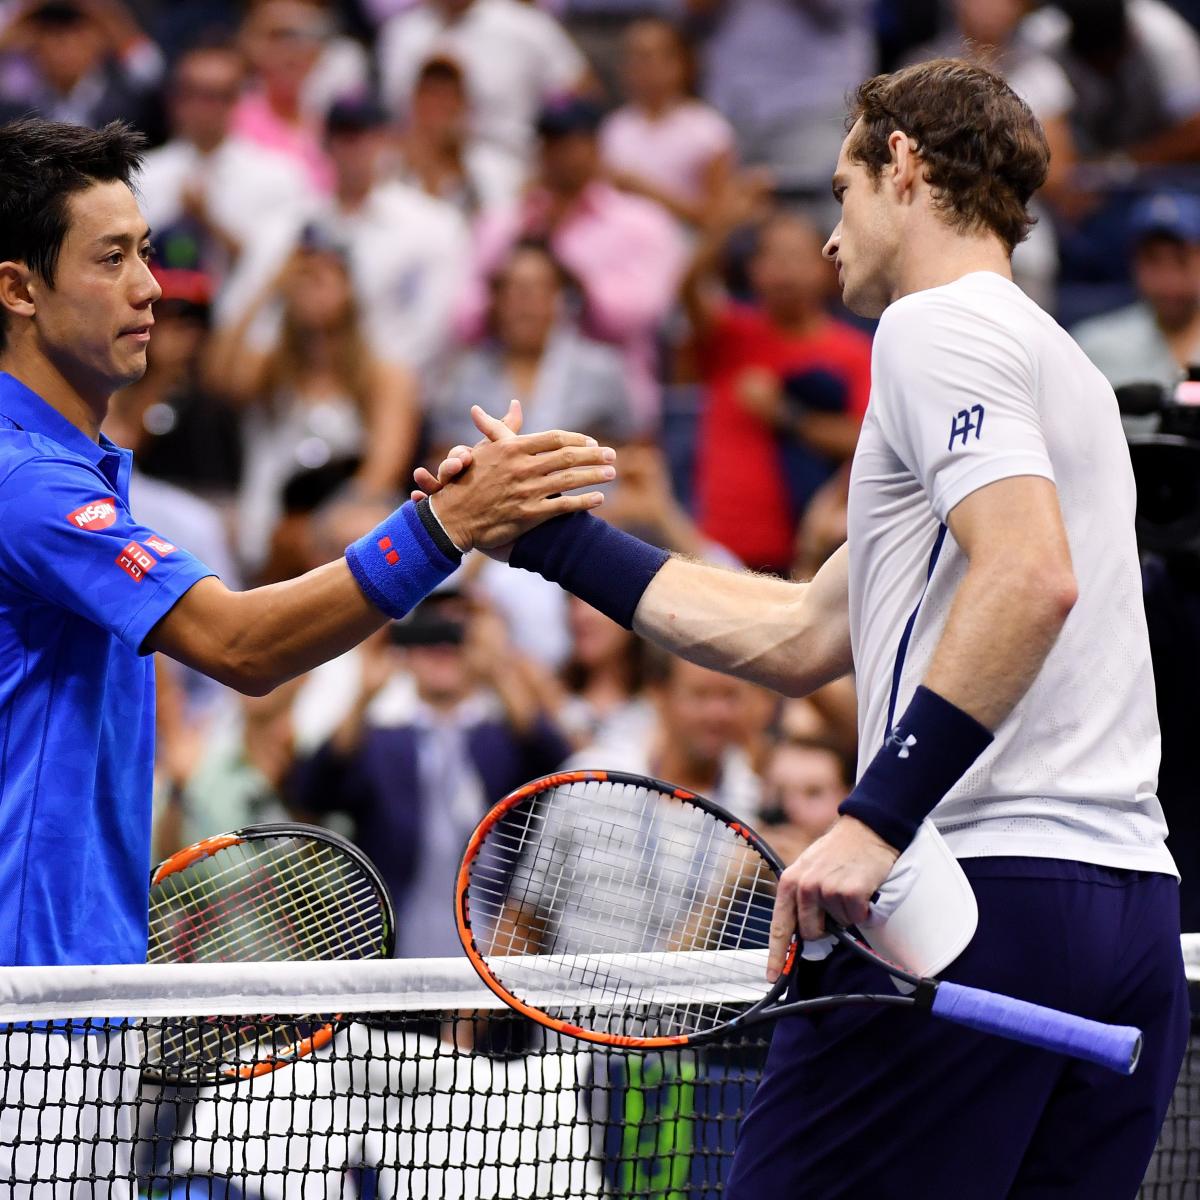 Andy Murray vs. Kei Nishikori: Score and Reaction from 2016 US Open